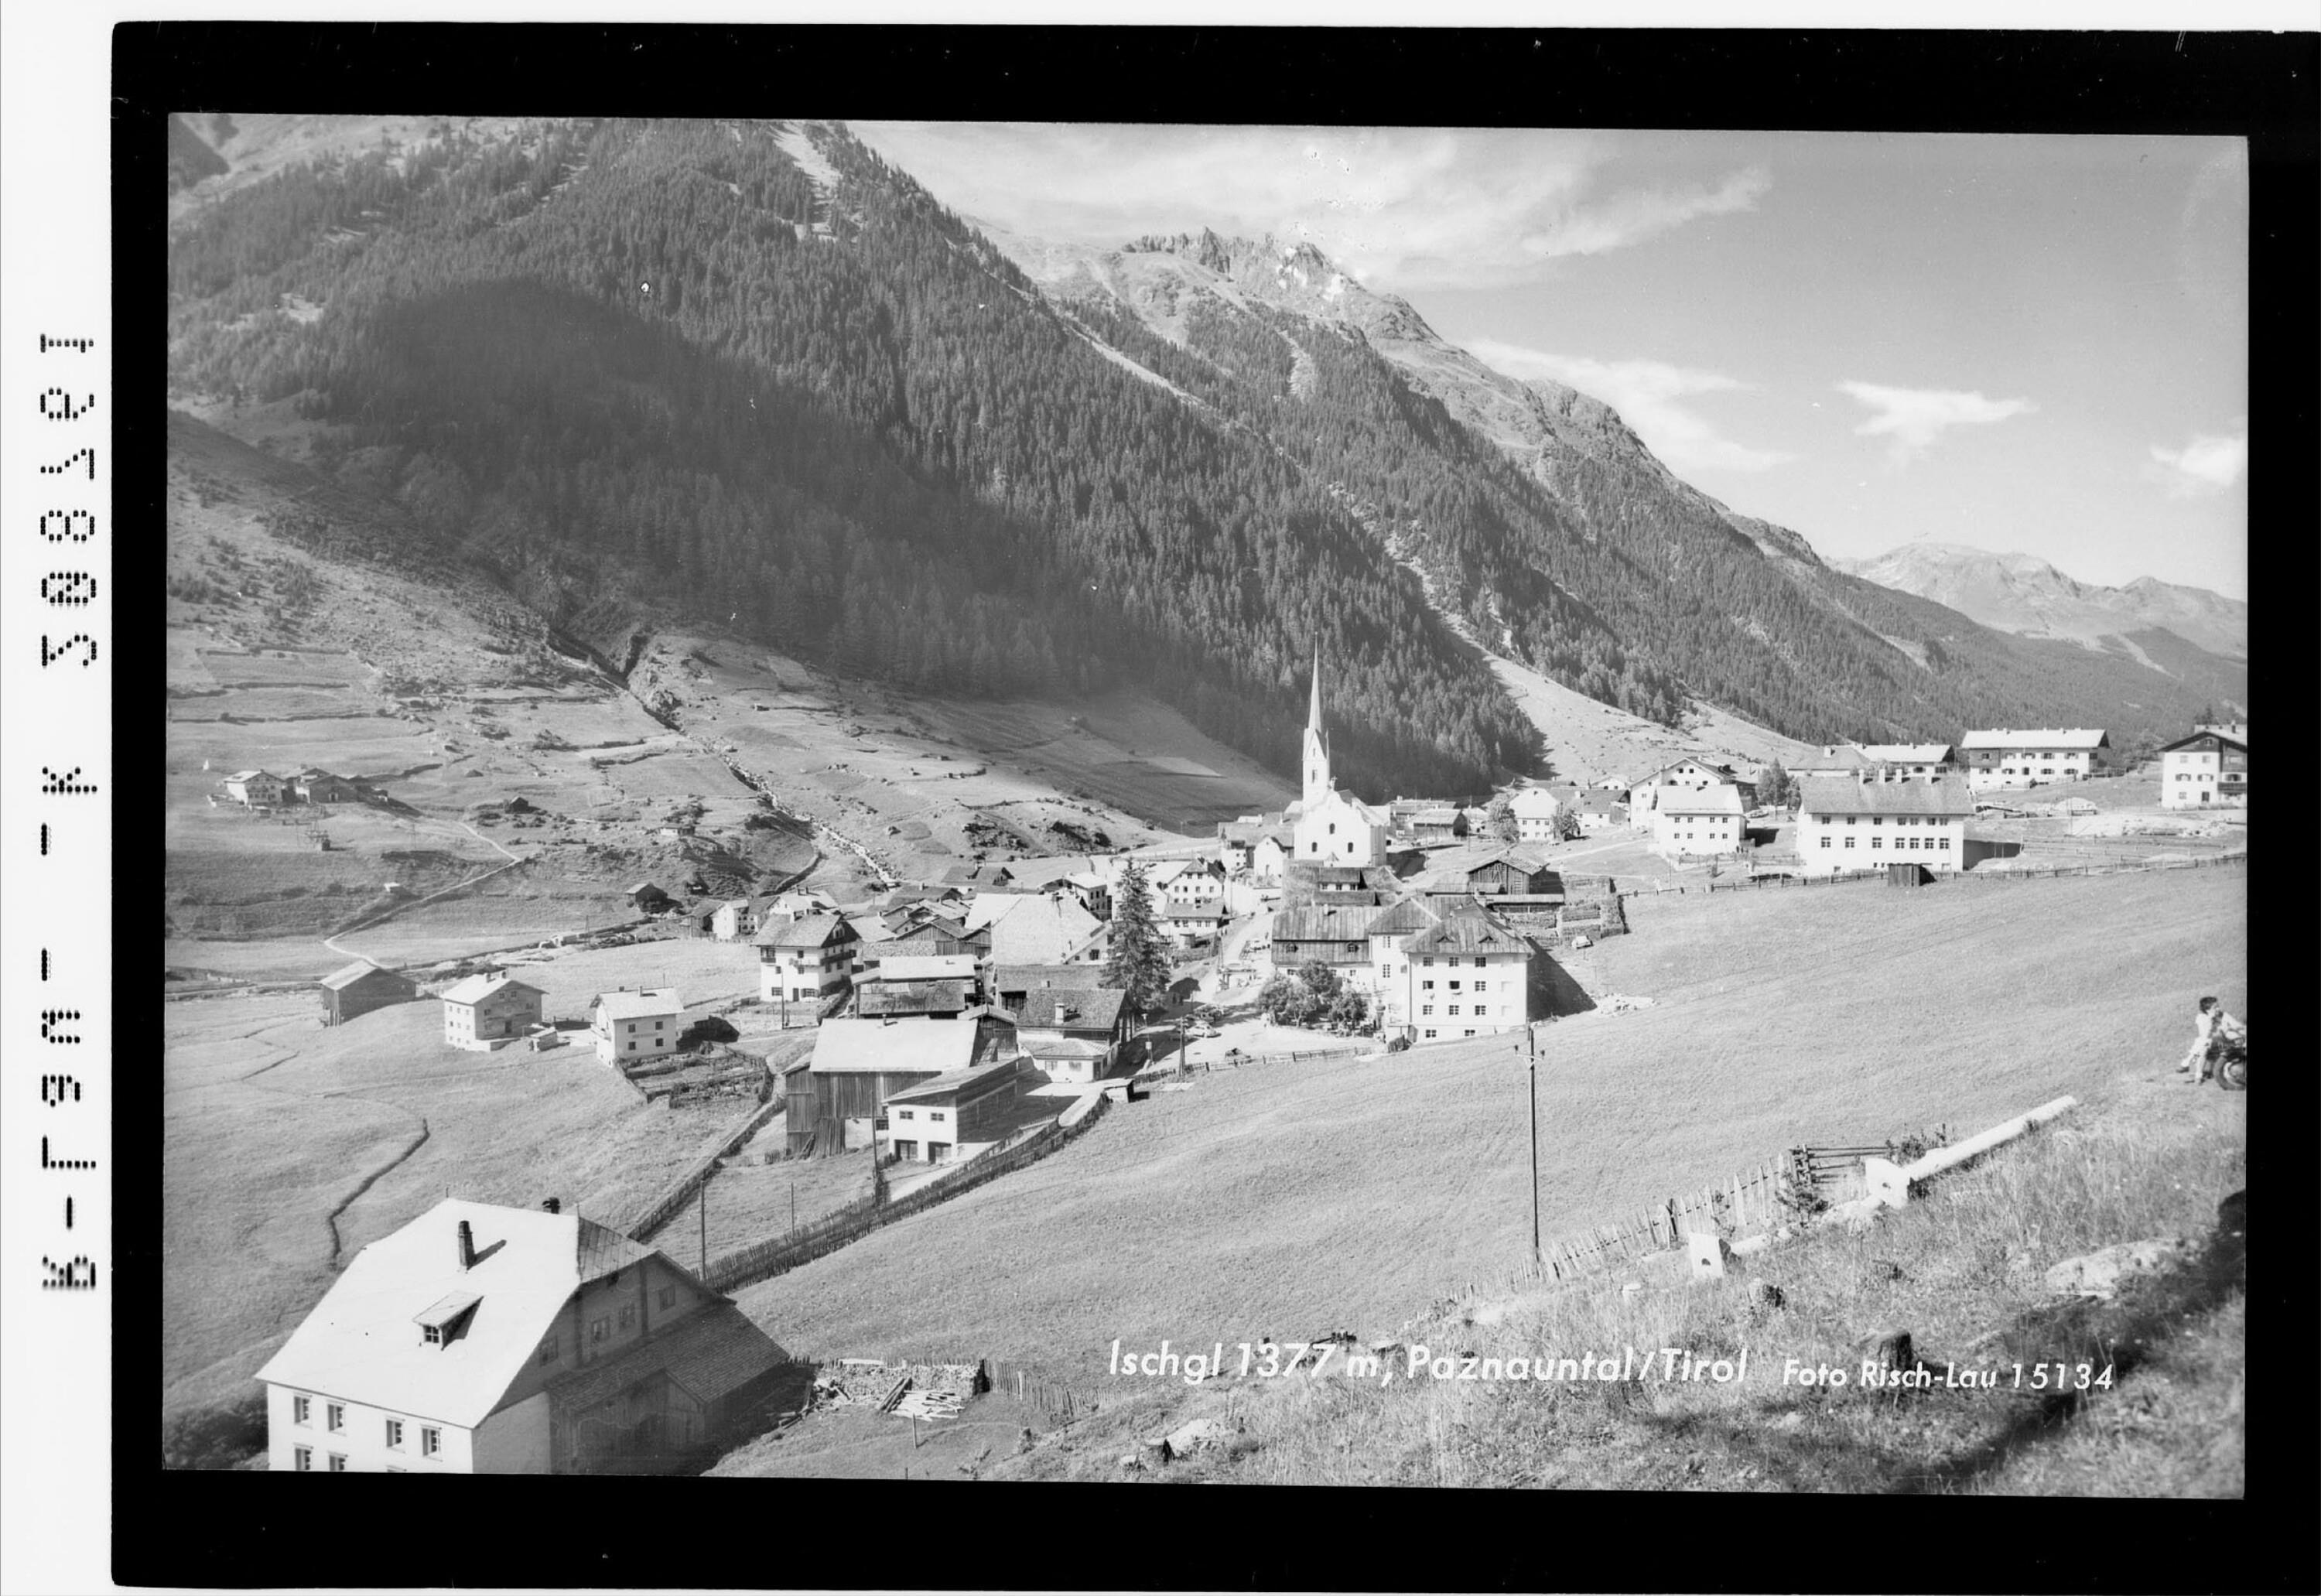 Ischgl 1377 m, Paznauntal, Tirol></div>


    <hr>
    <div class=